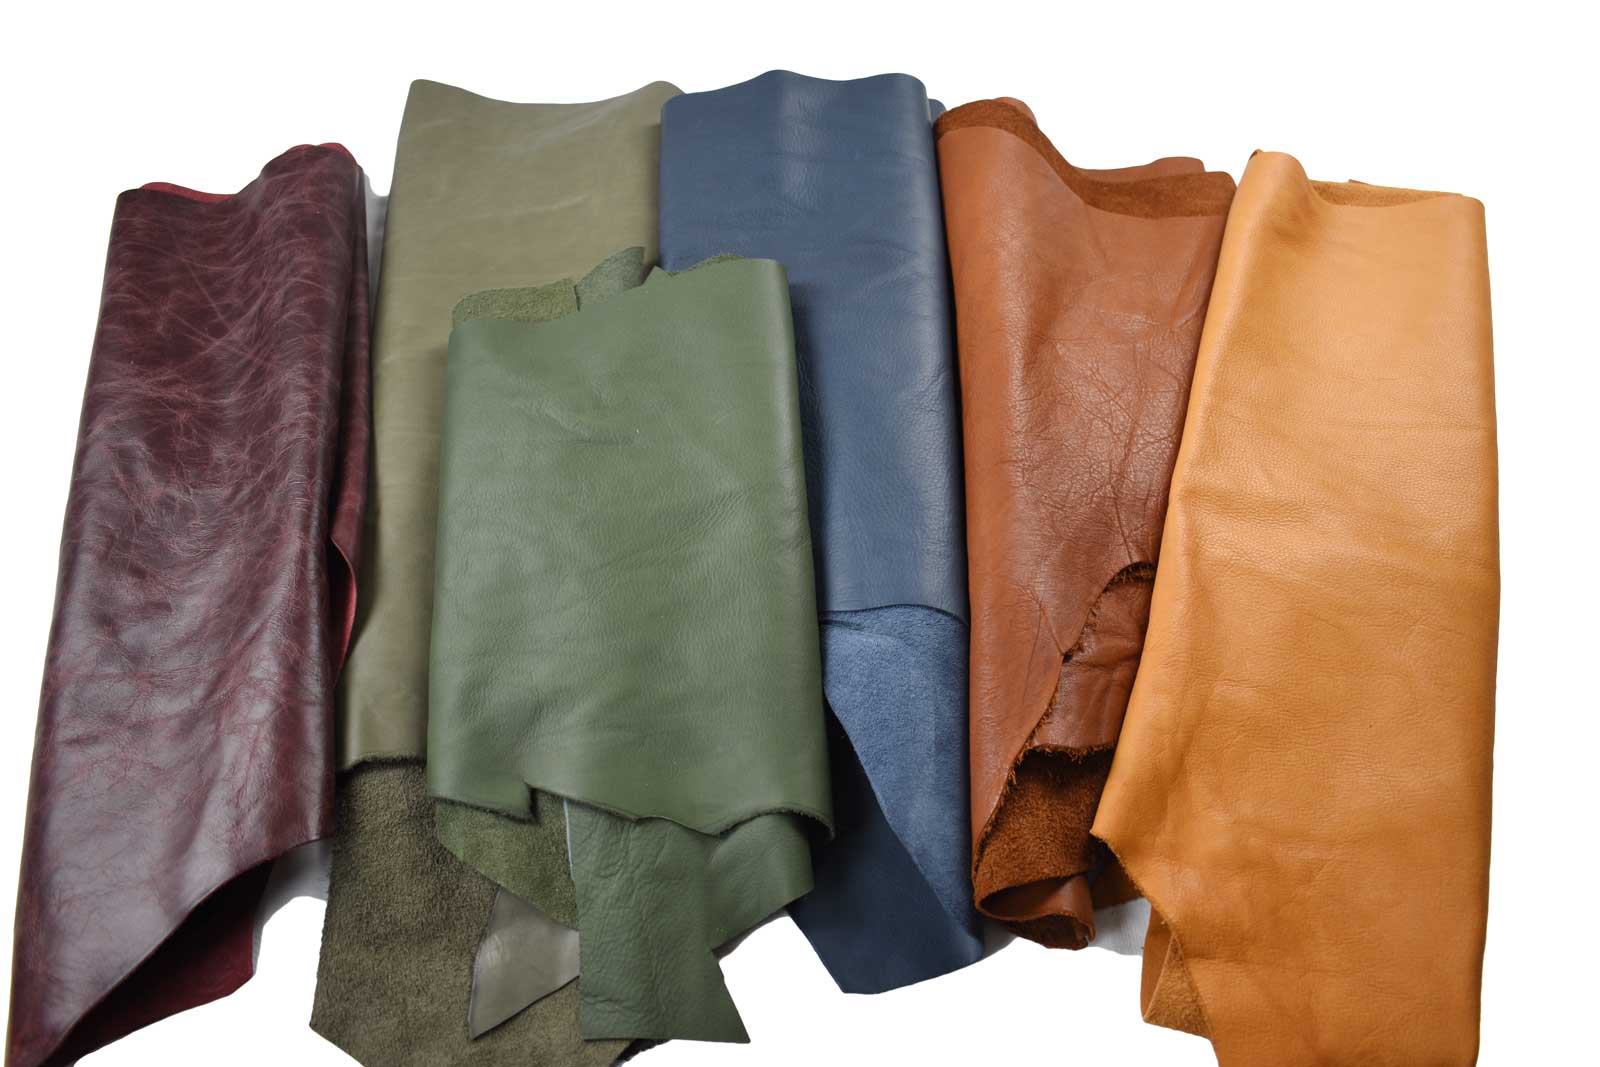 Full grain leather scraps - Assorted Colour 1 - 5 sq ft